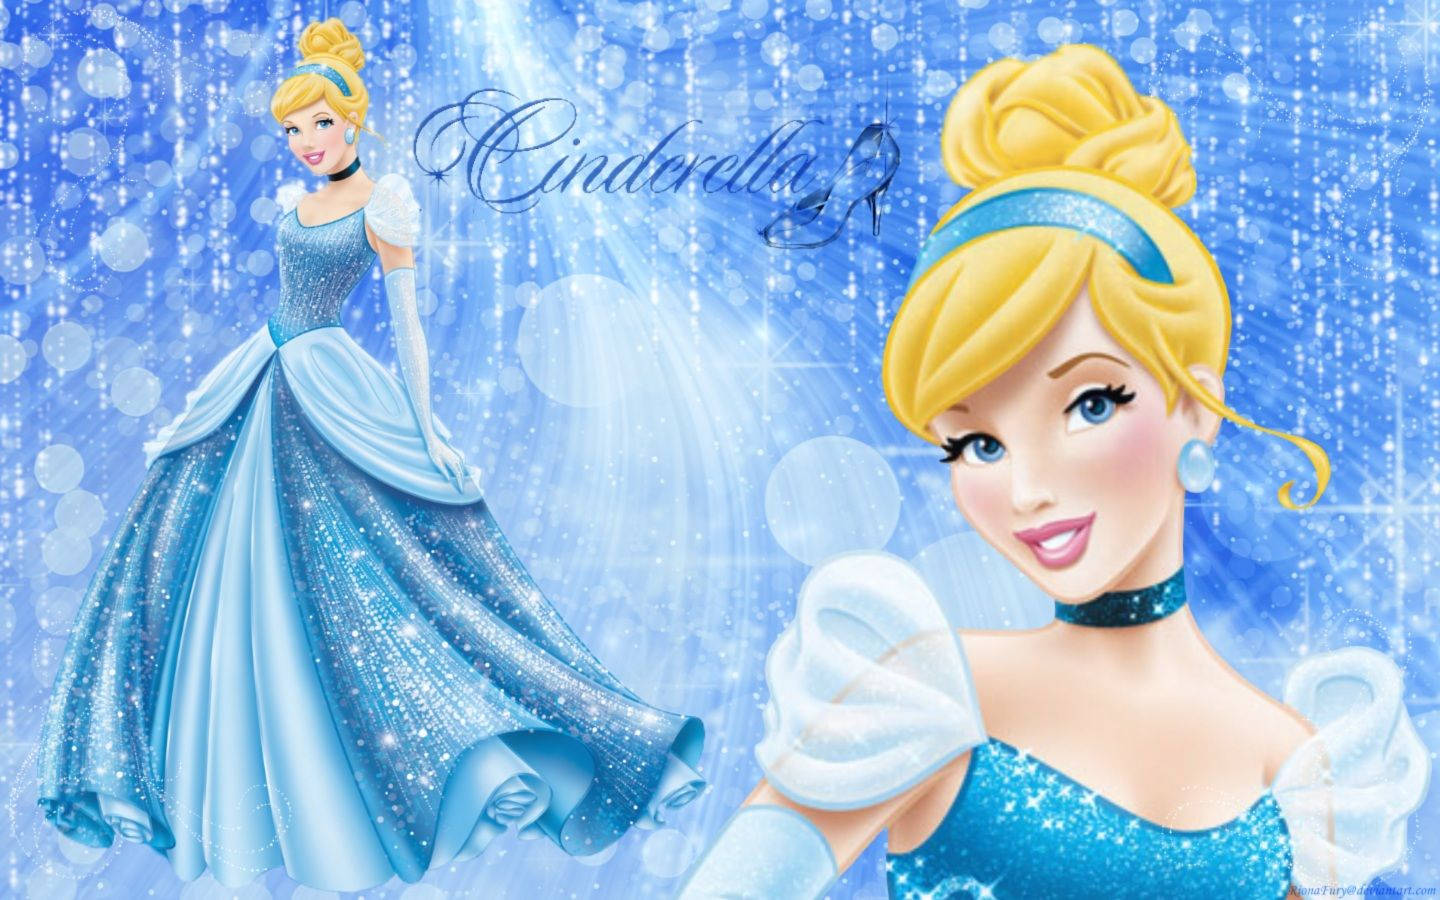 Beautiful Princess Cinderella Wallpaper